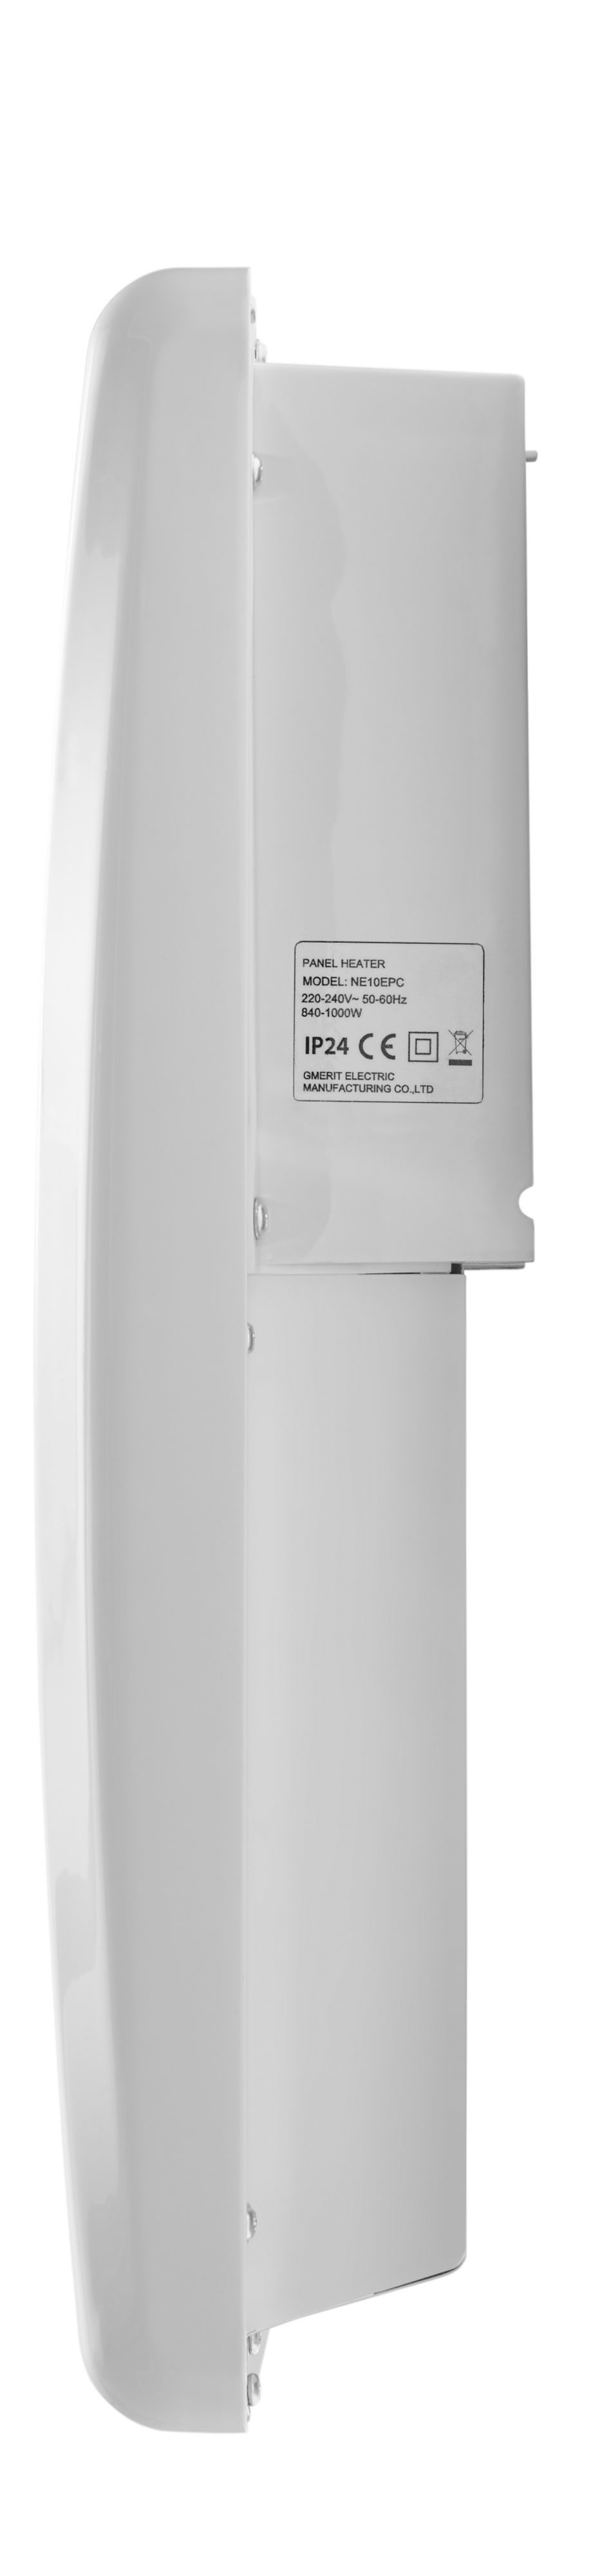 Dillam Electric 1500W White Panel heater